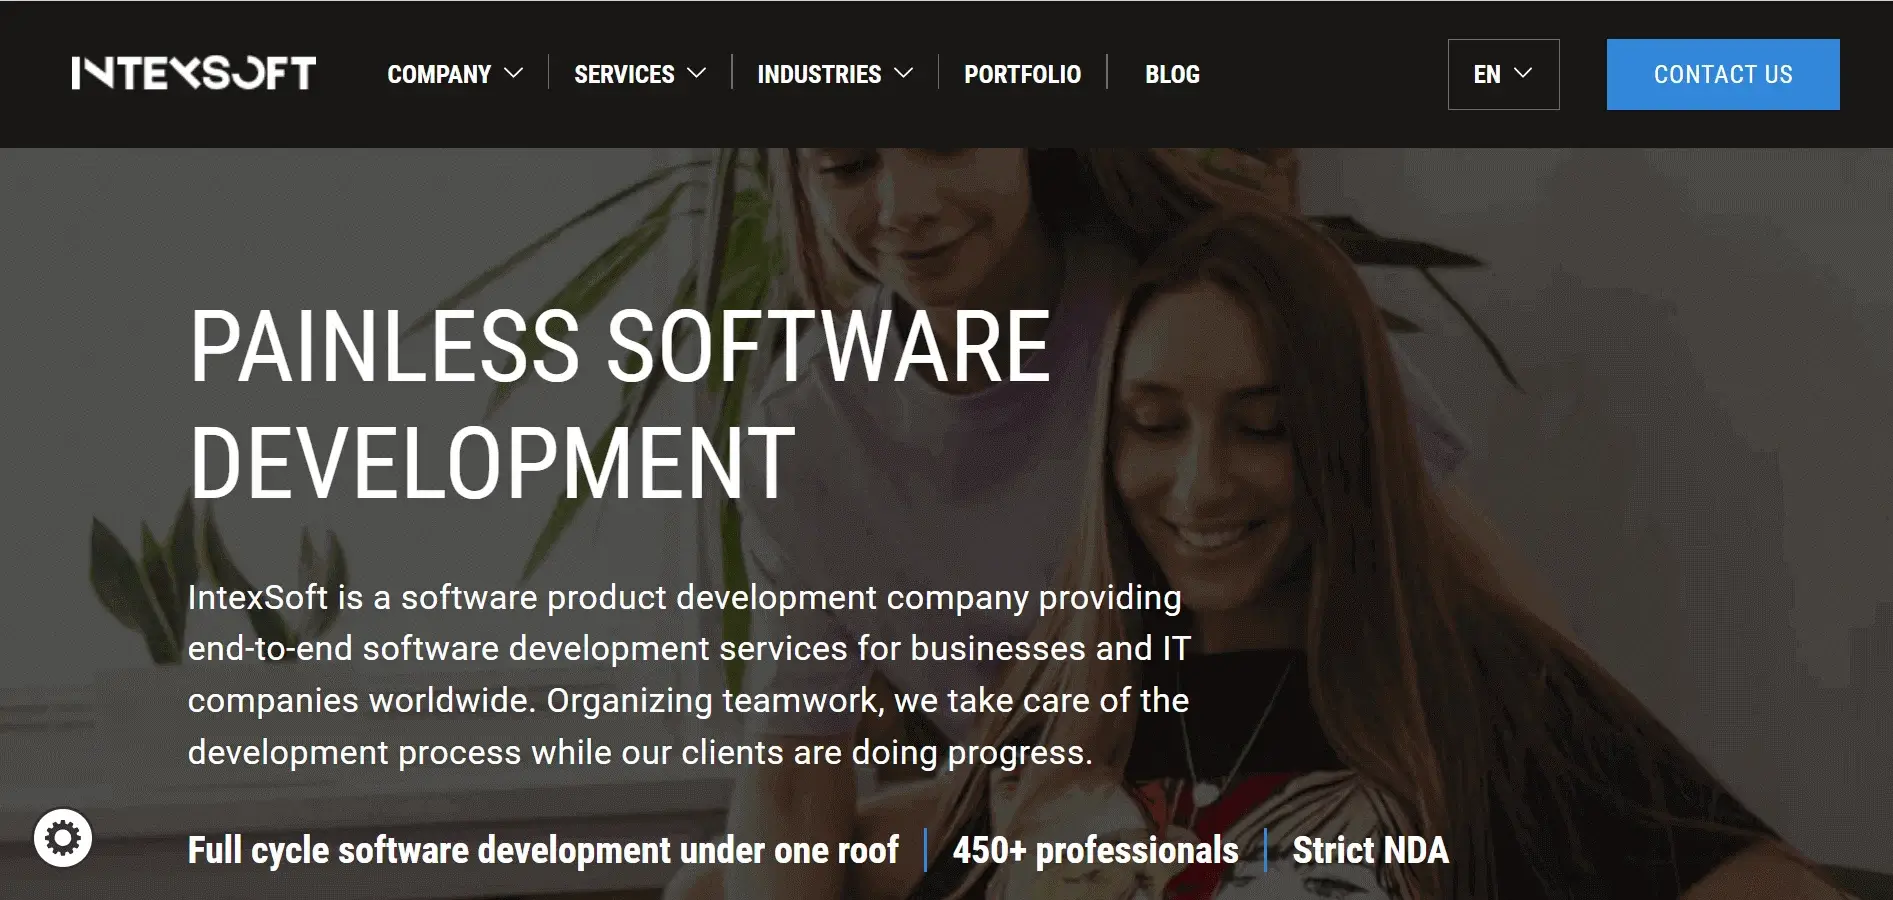 IntexSoft’s website